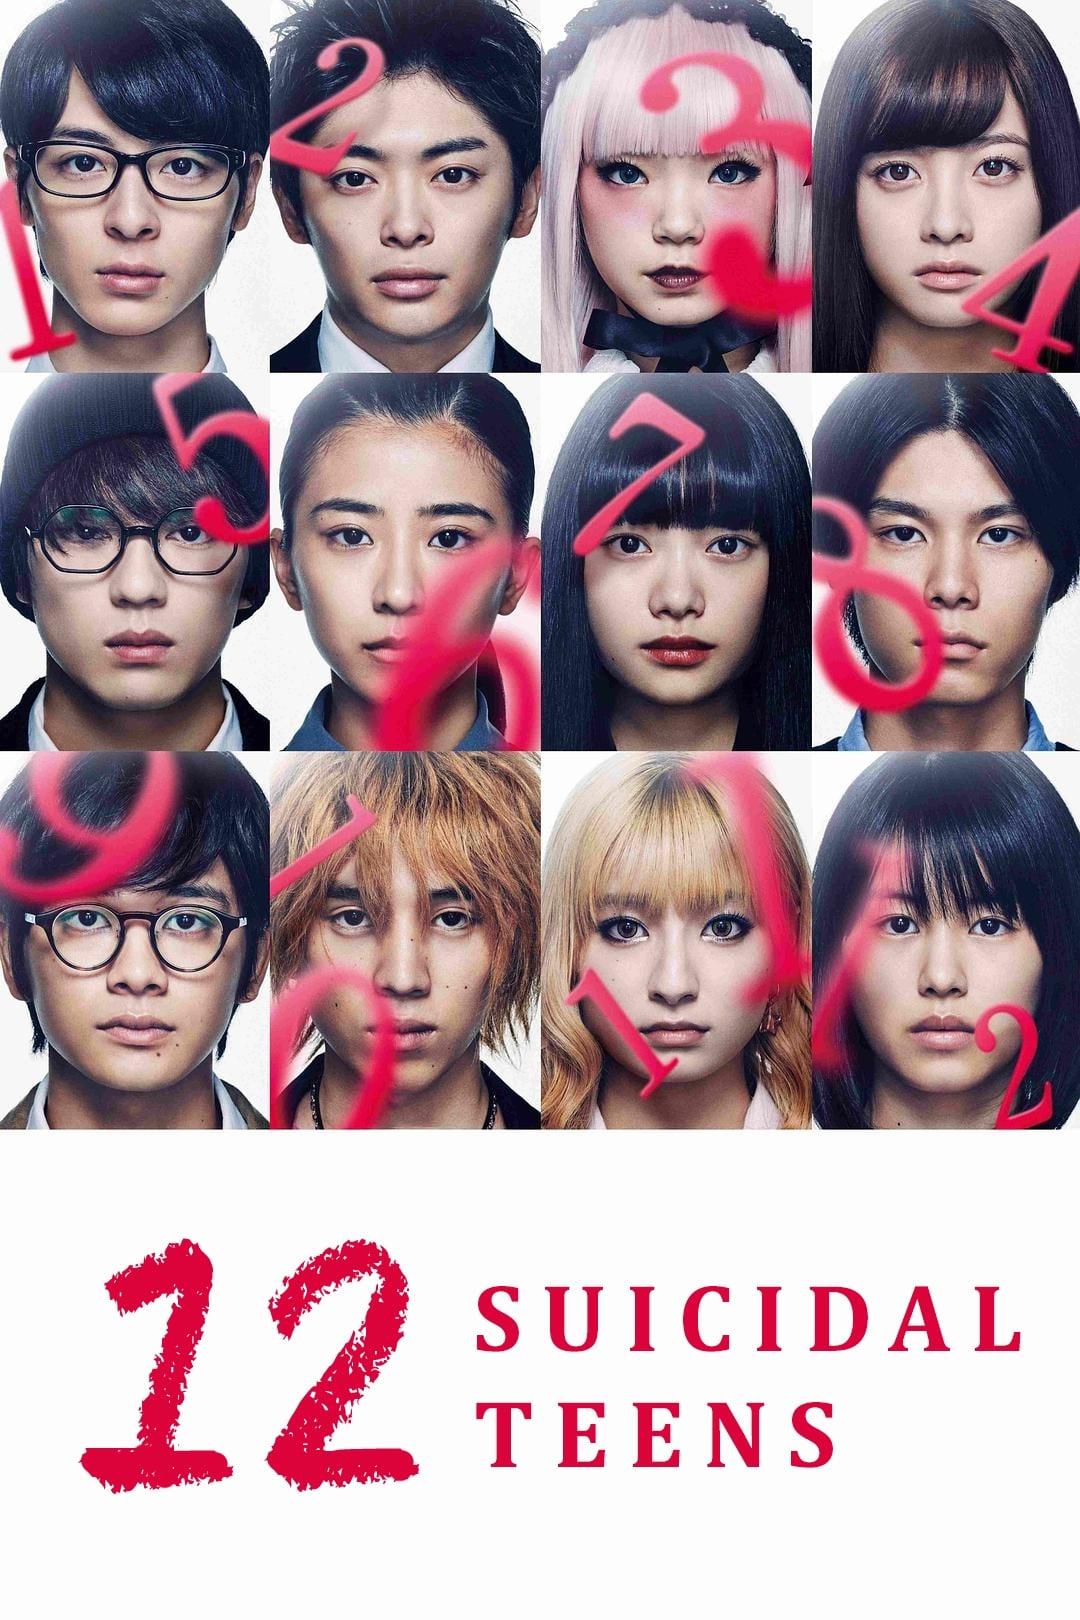 12 Suicidal Teens poster